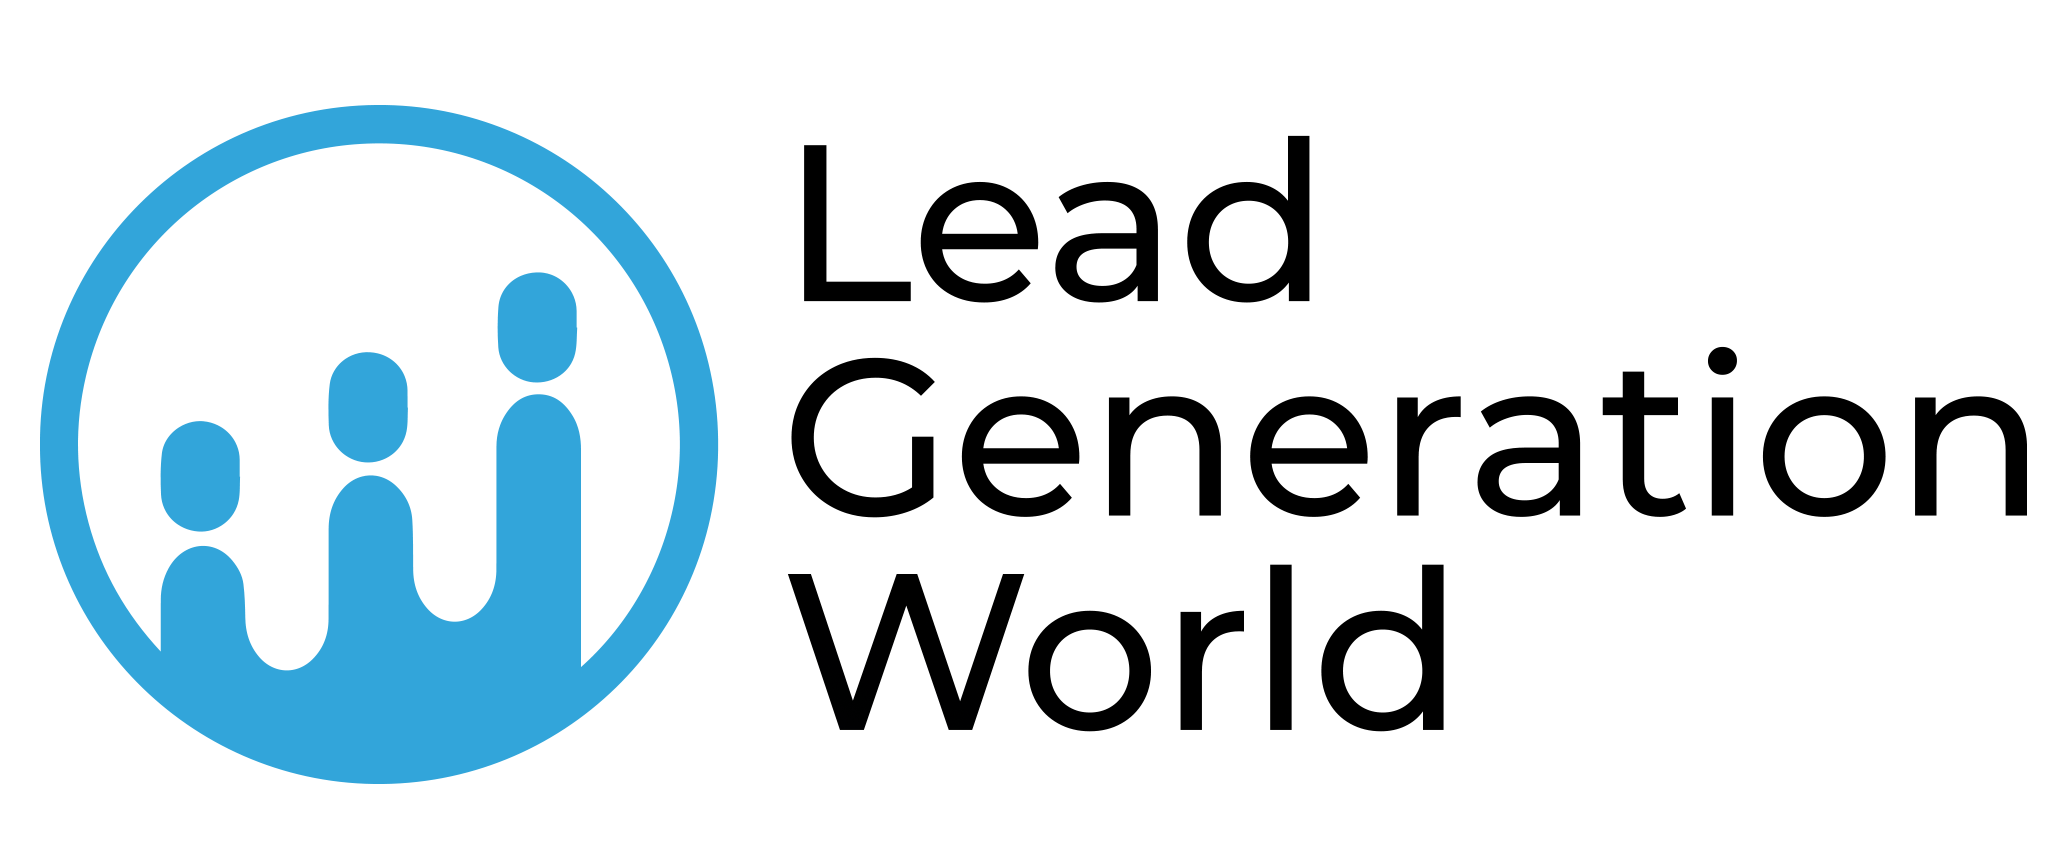 Lead Generation World Conference London April 35, 2022